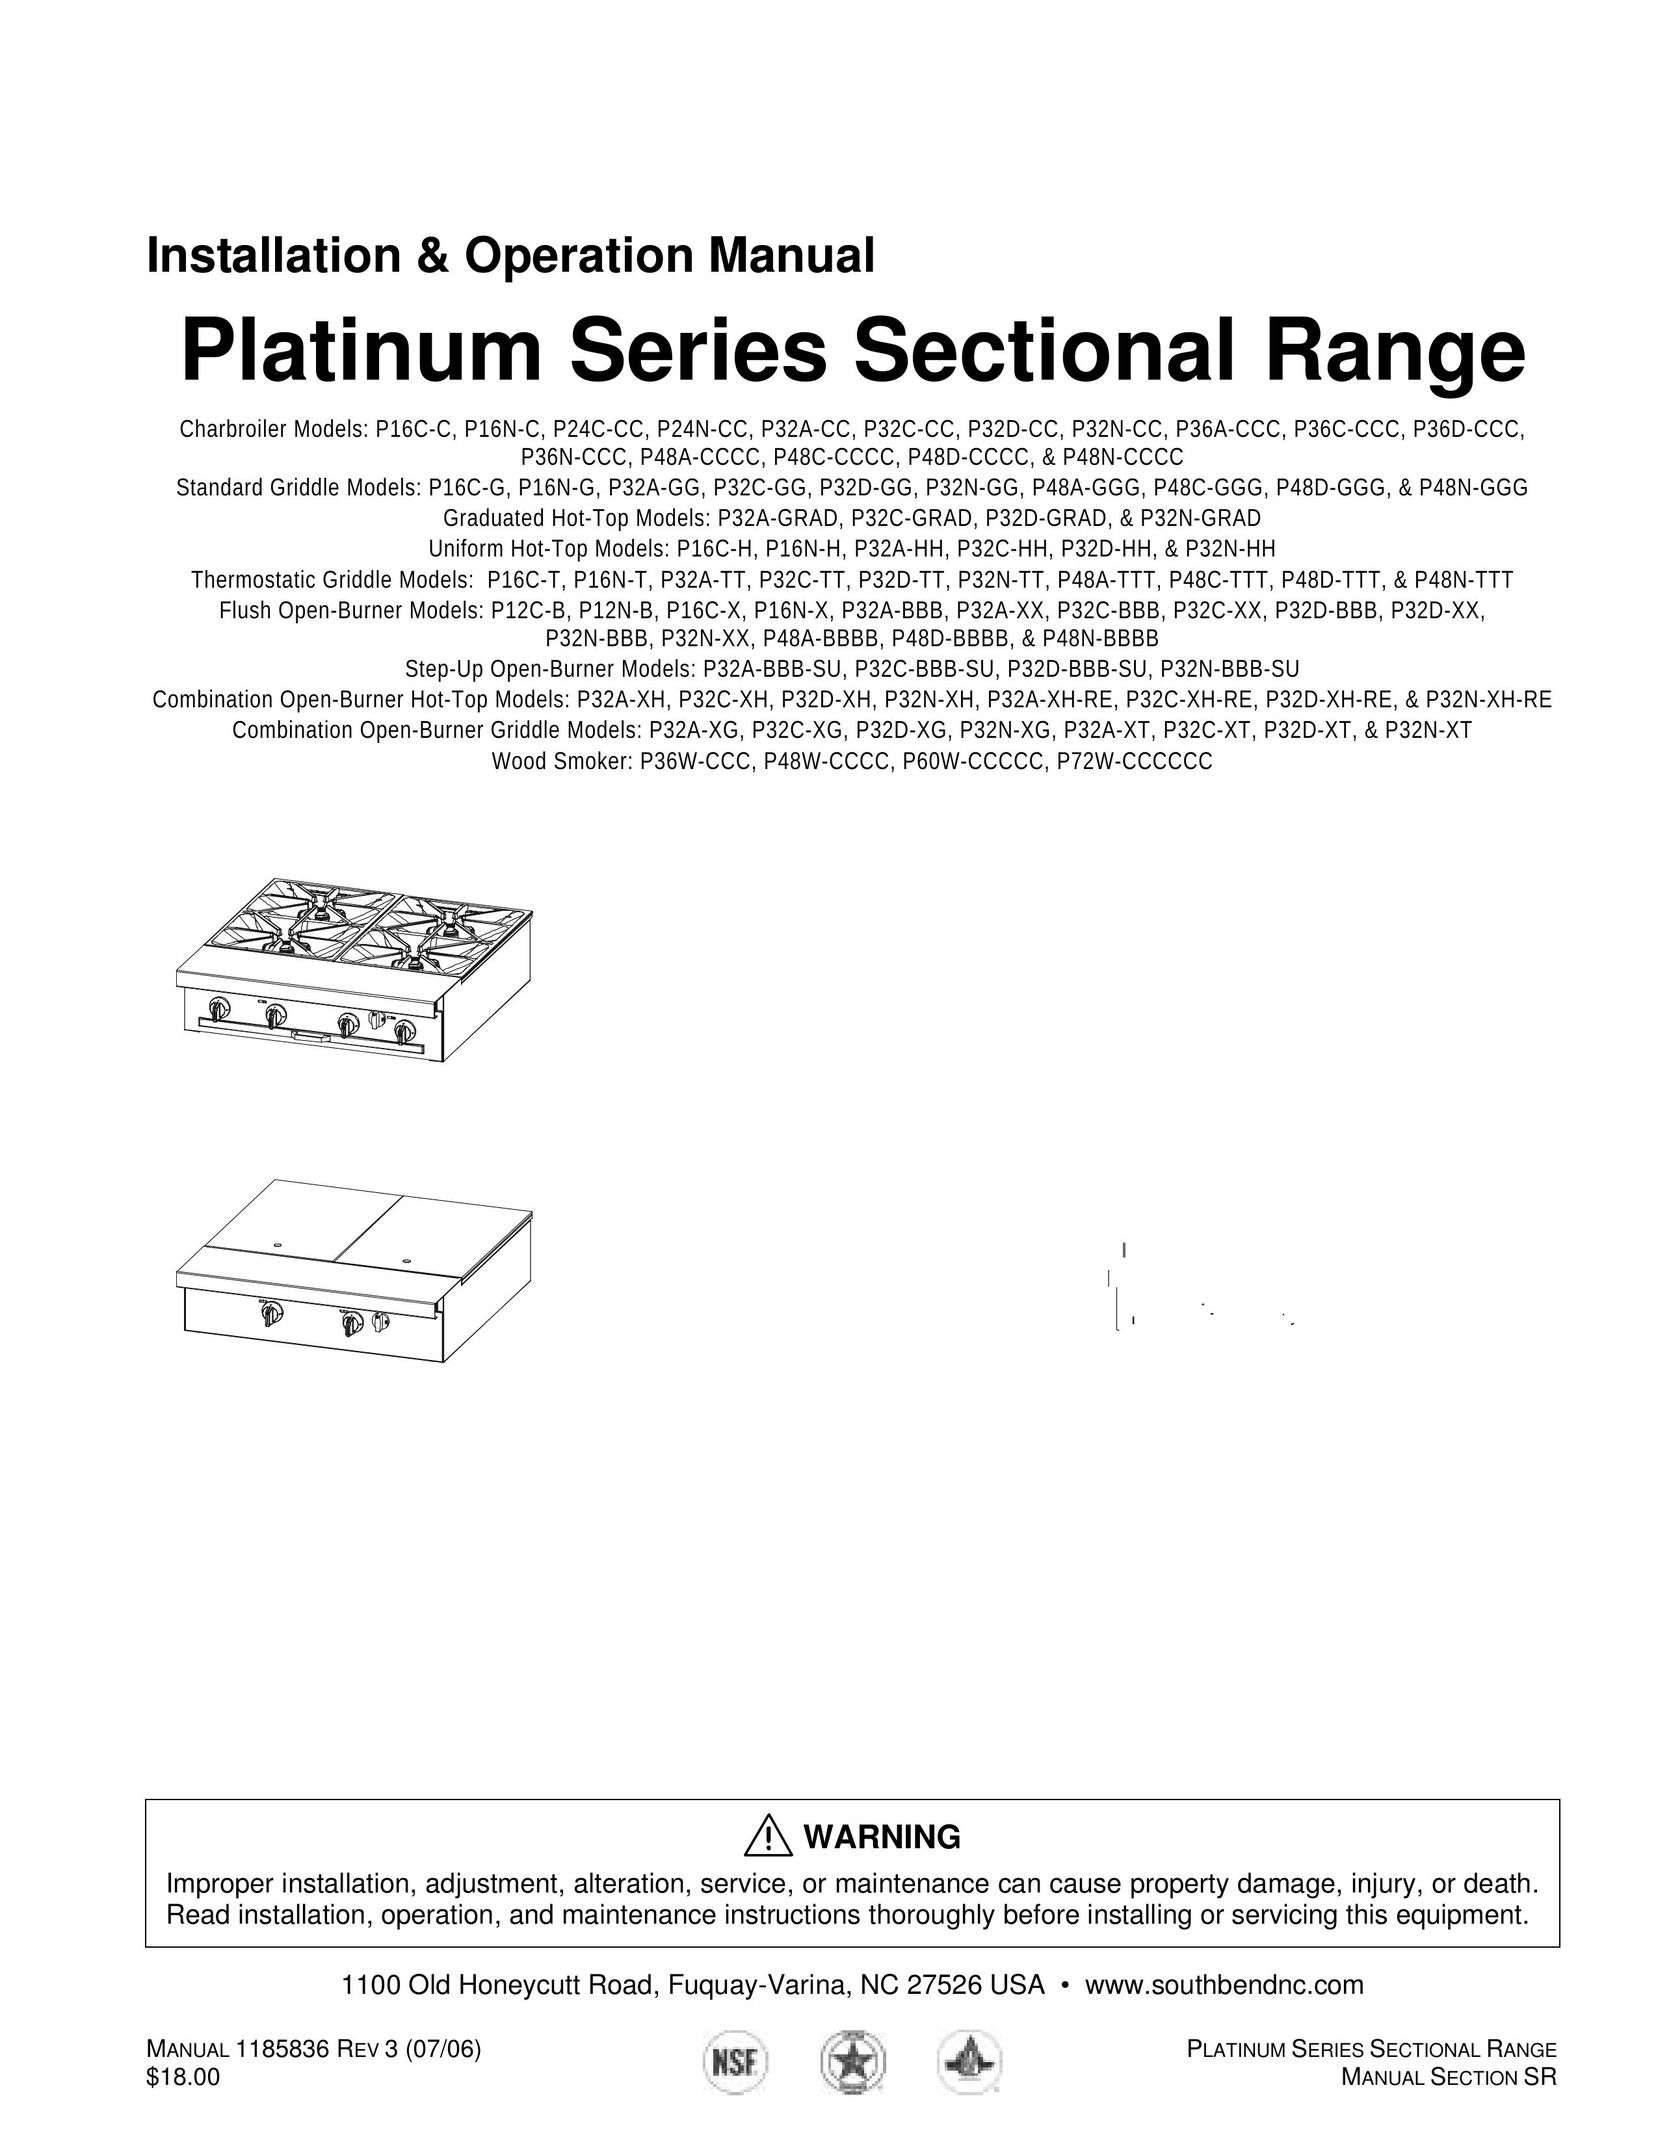 Southbend P16N-H Range User Manual